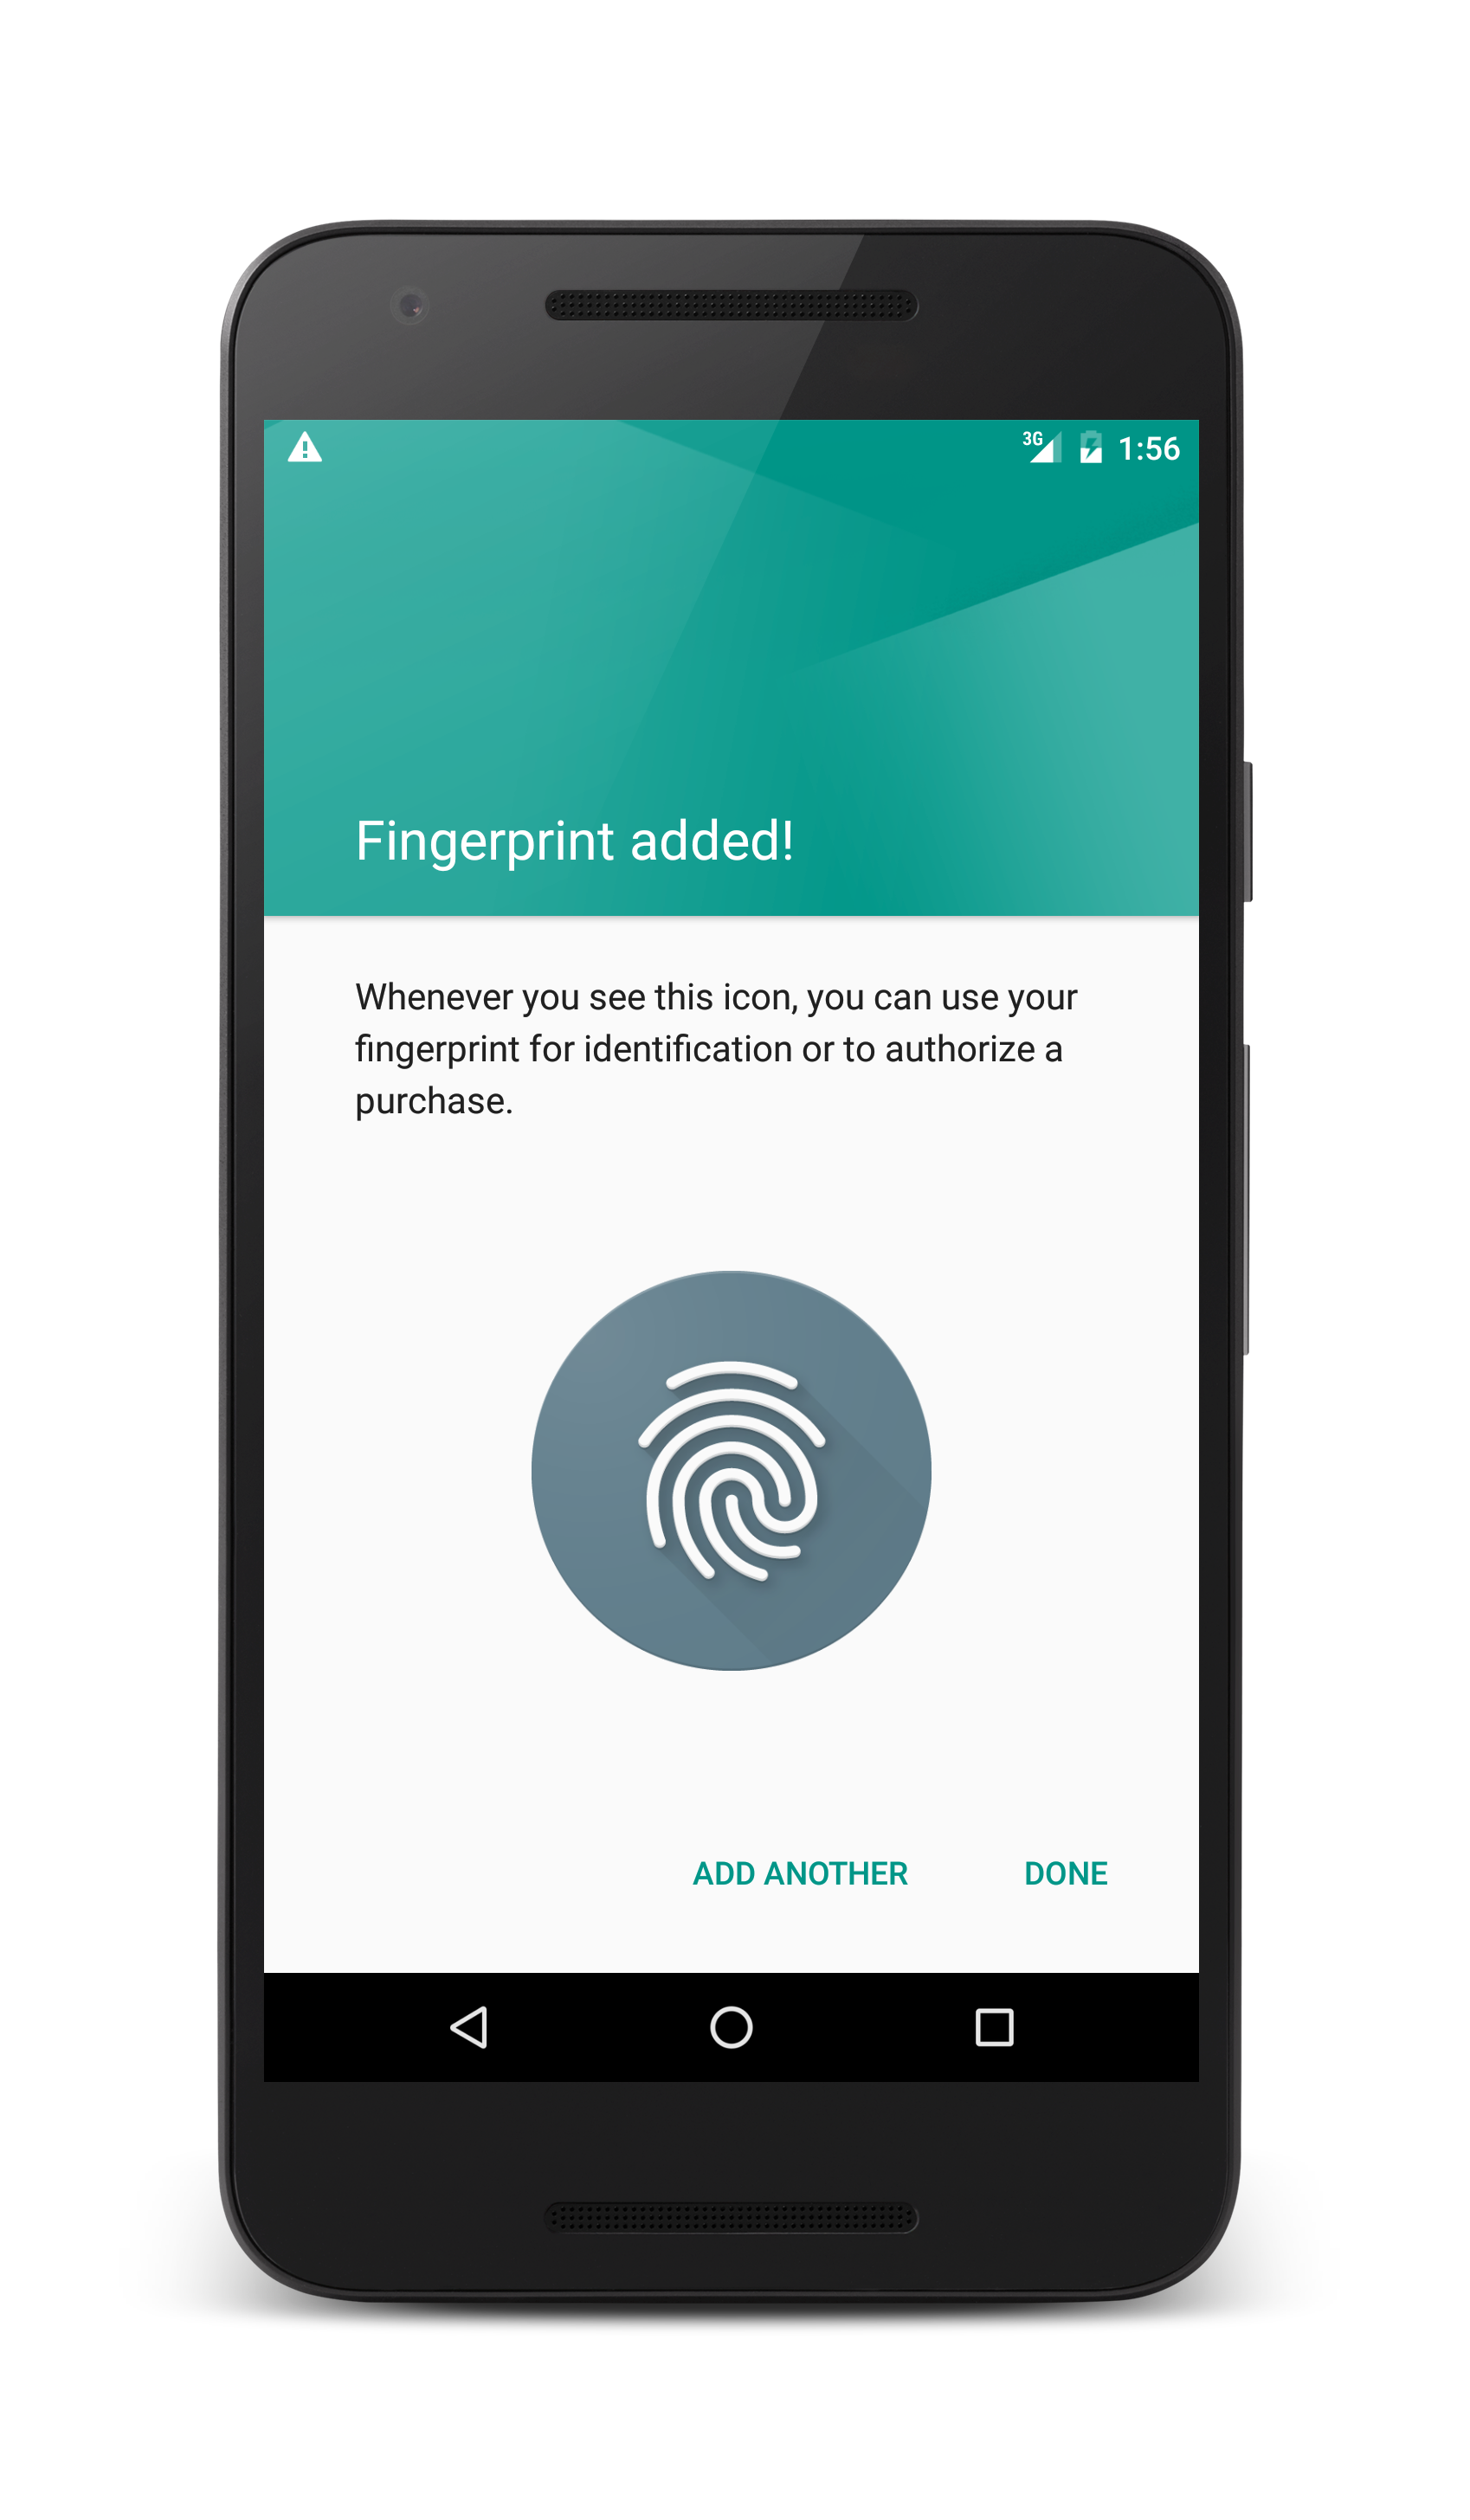 Screen displaying Fingerprint added!